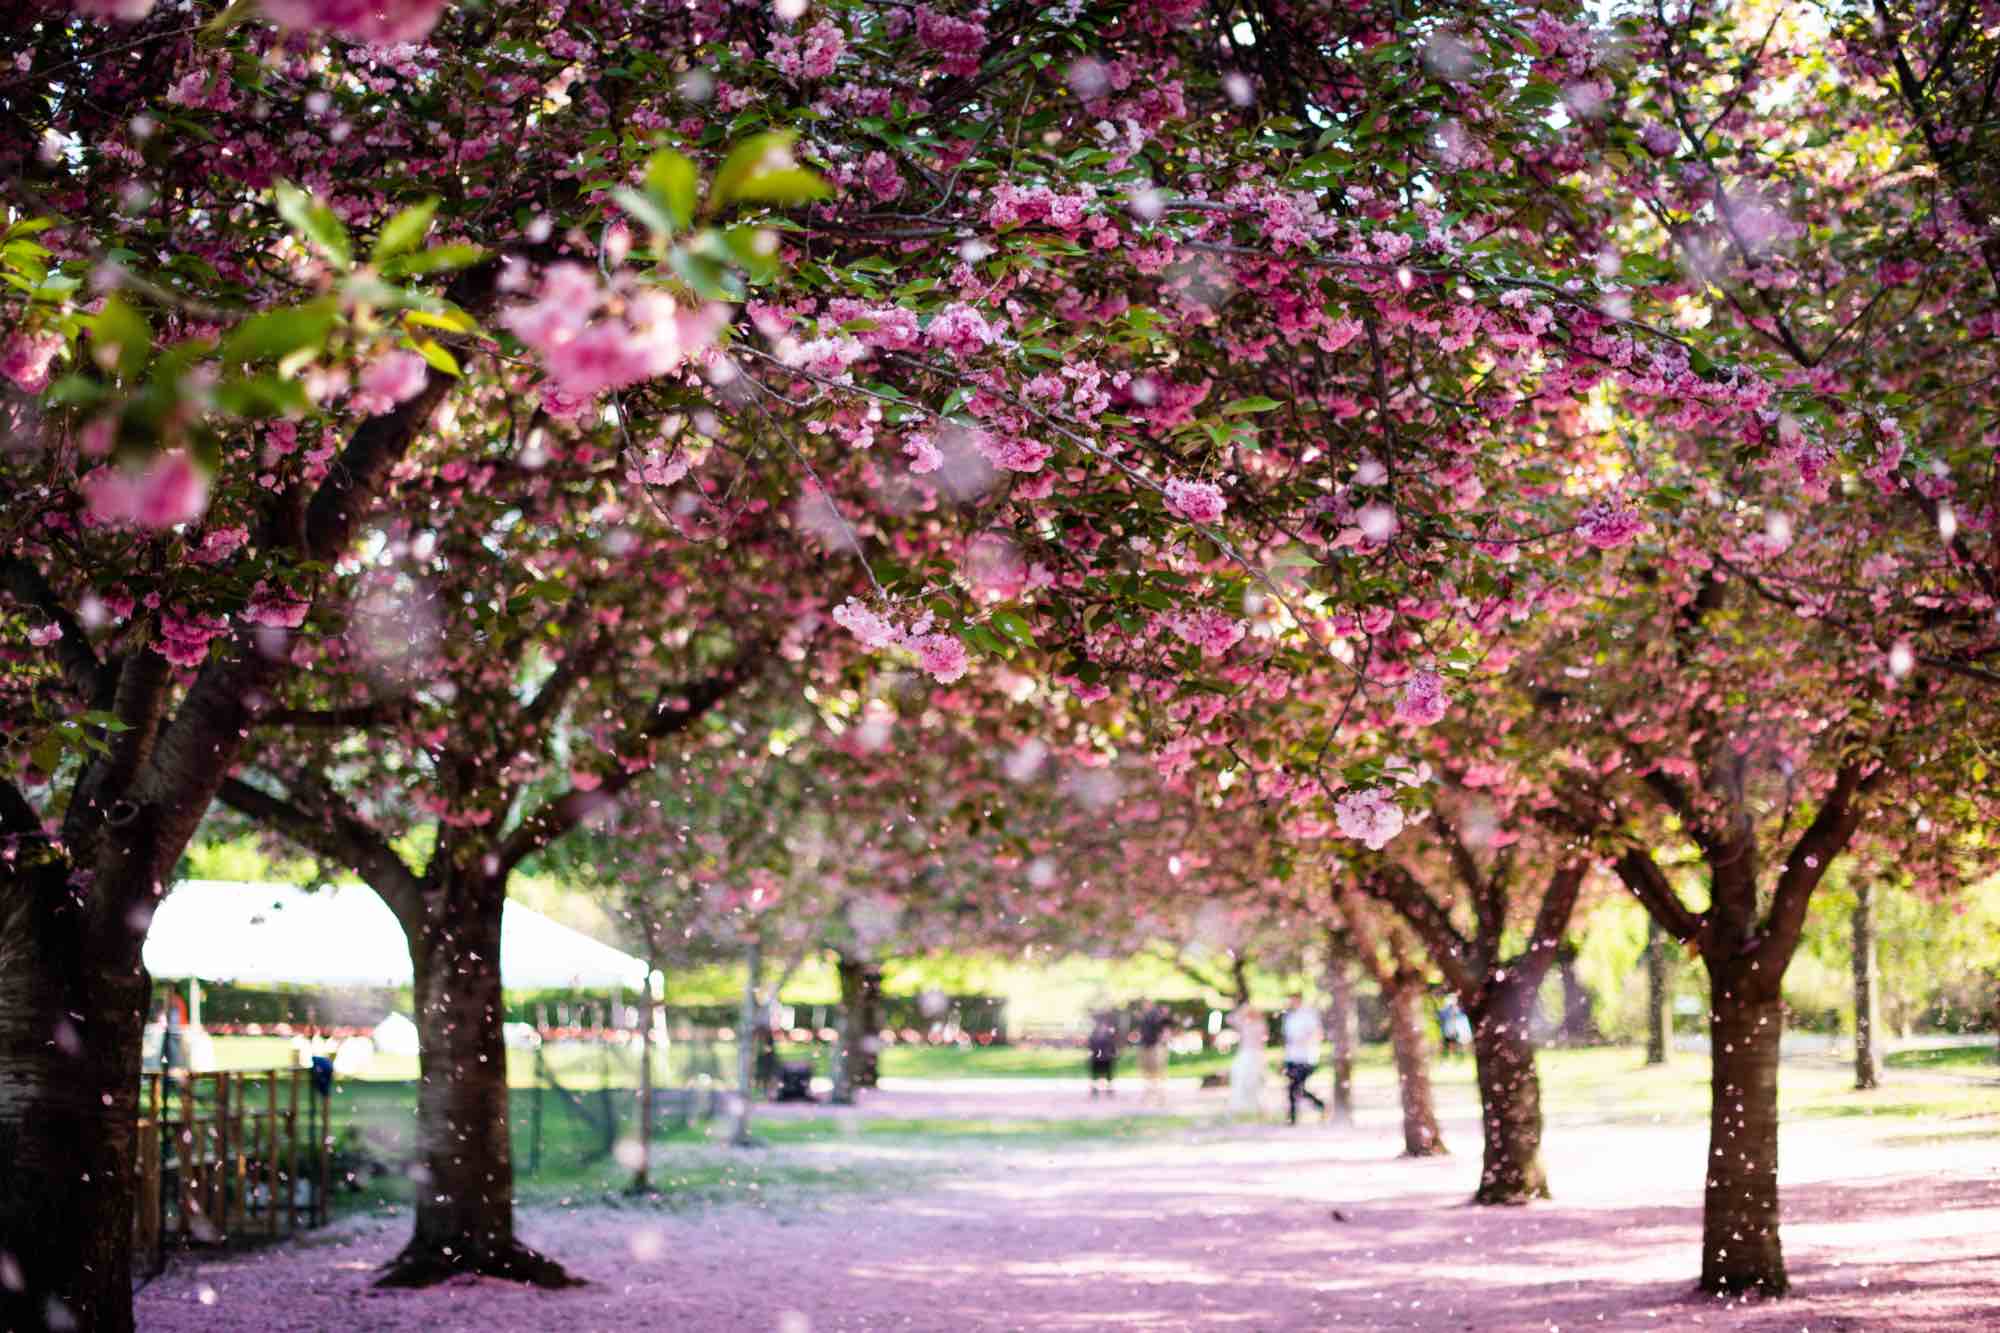 Cherry blossoms at the Brooklyn Botanic Garden.